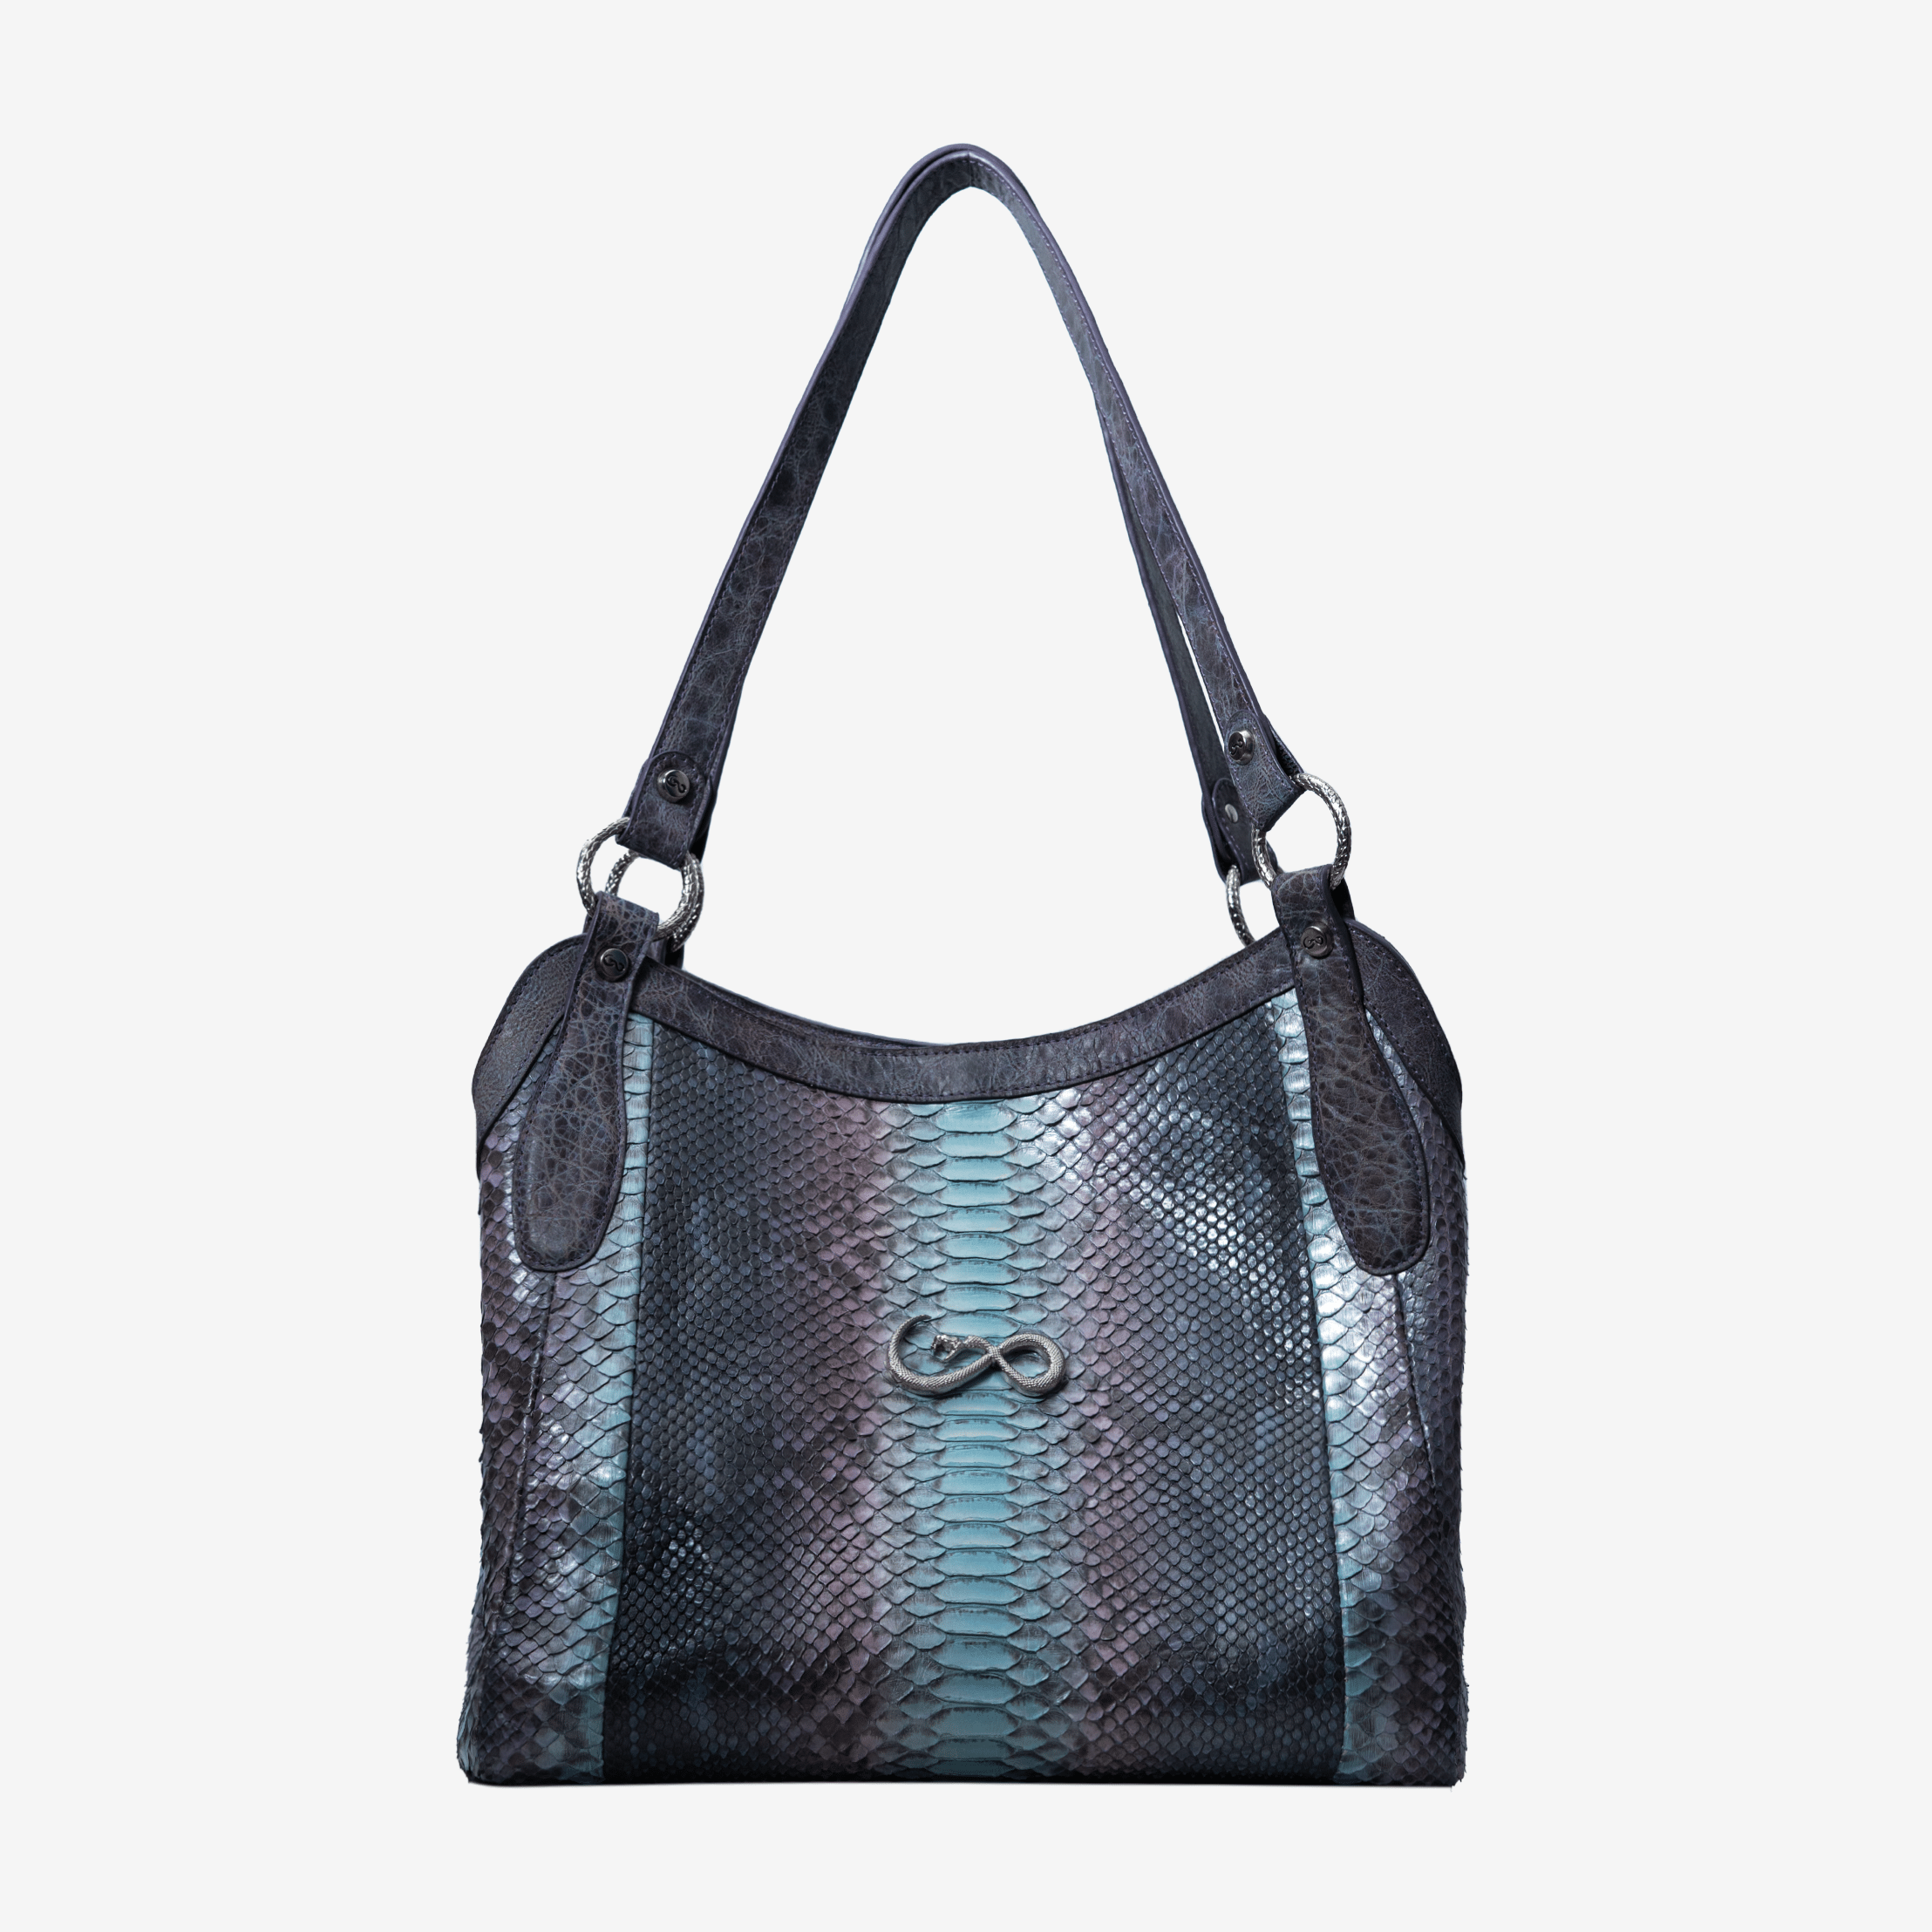 Veneno Leather Goods Bolsa Shoulder bag  - BARBARA Blue Mint